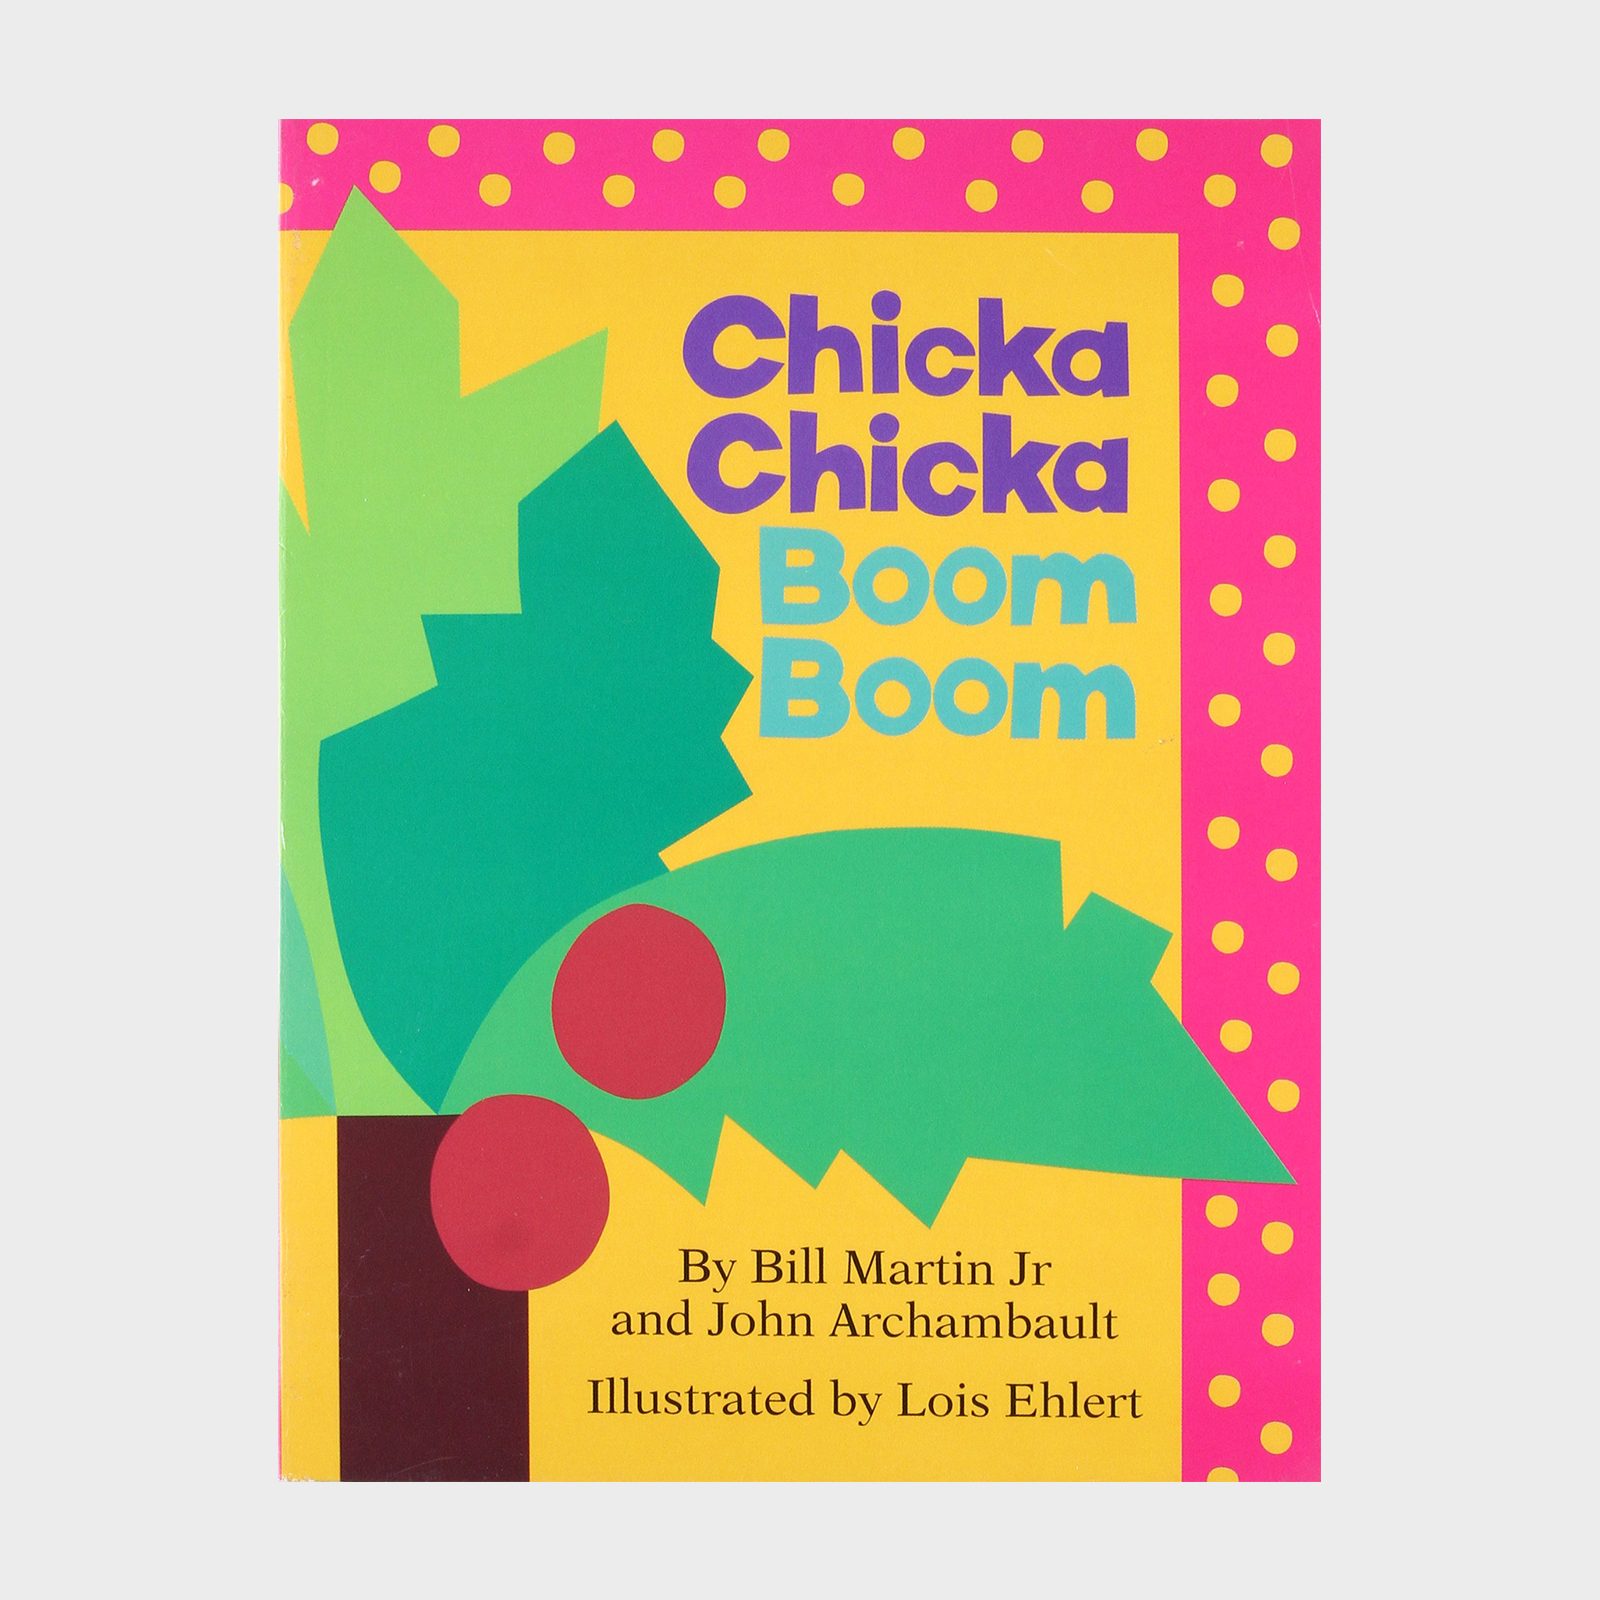 Chicka Chicka Boom Boom By Bill Martin Jr. And John Archambault Children's Book